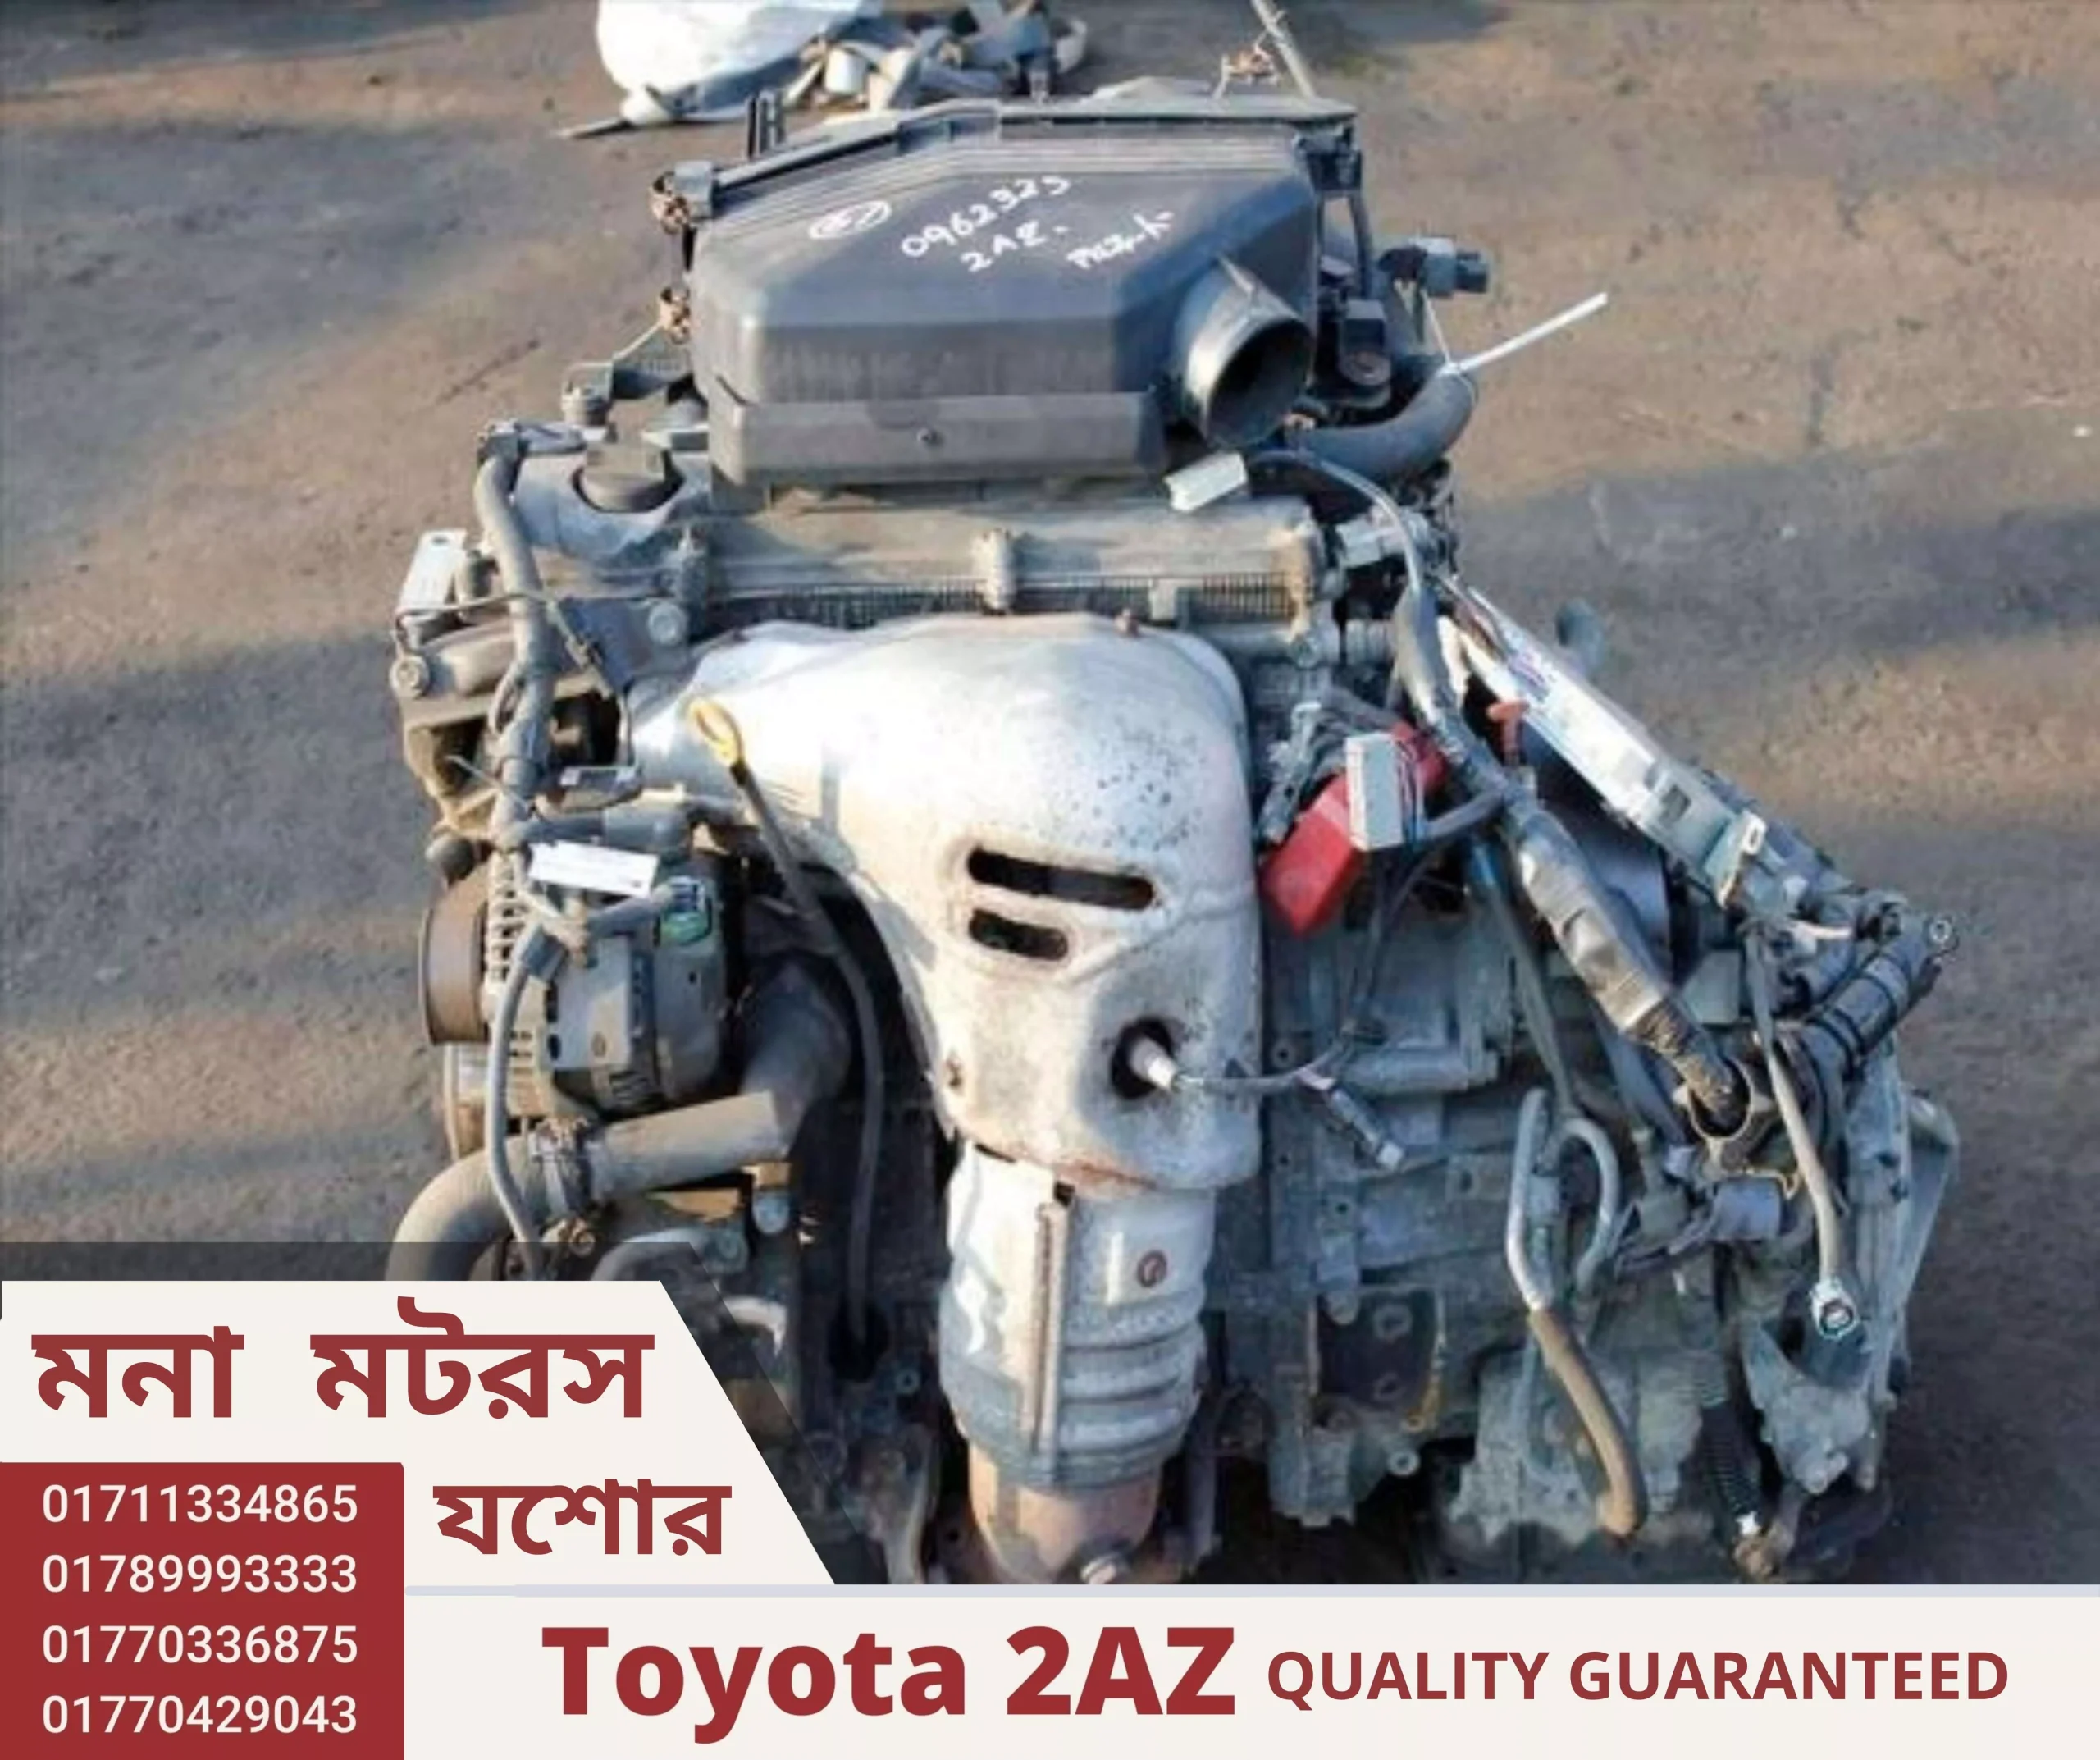 Toyota 2AZ scaled